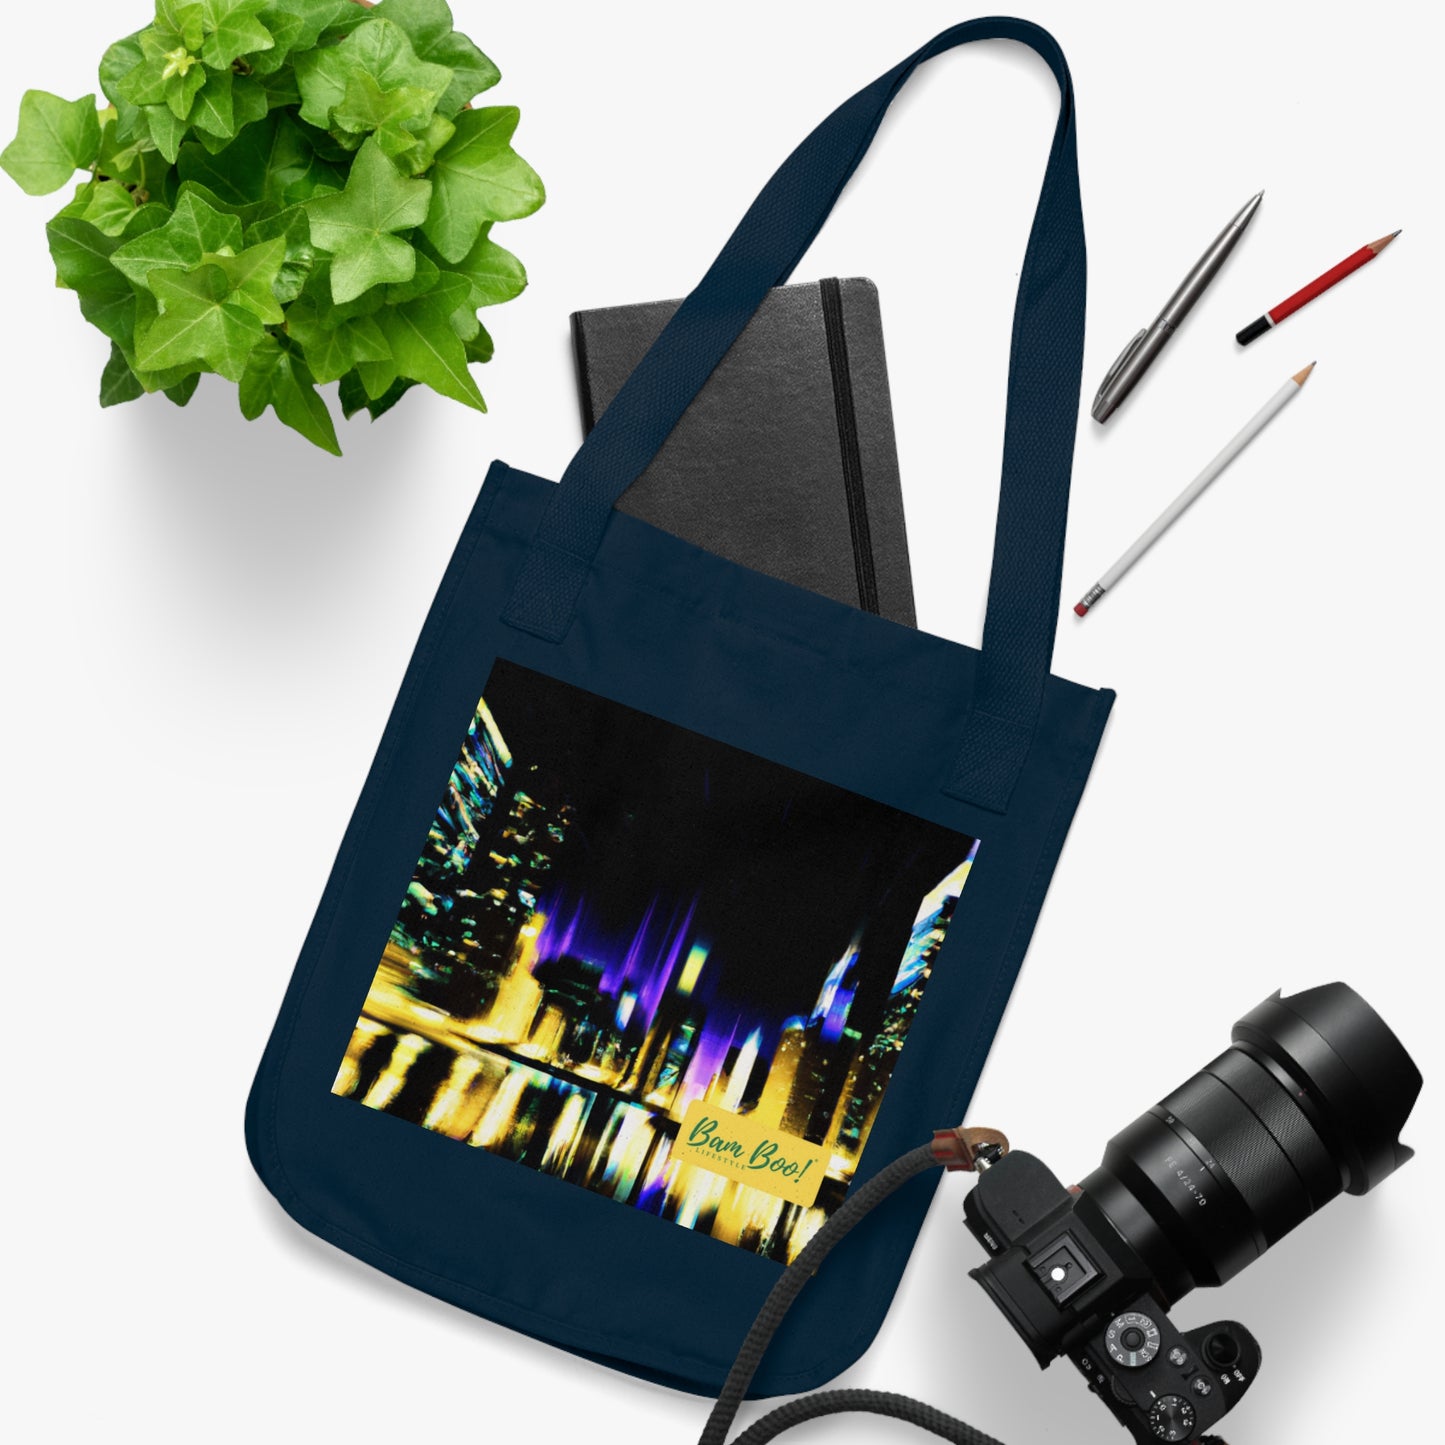 "A City's Illumination: Capturing the Vibrant City Skyline" - Bam Boo! Lifestyle Eco-friendly Tote Bag